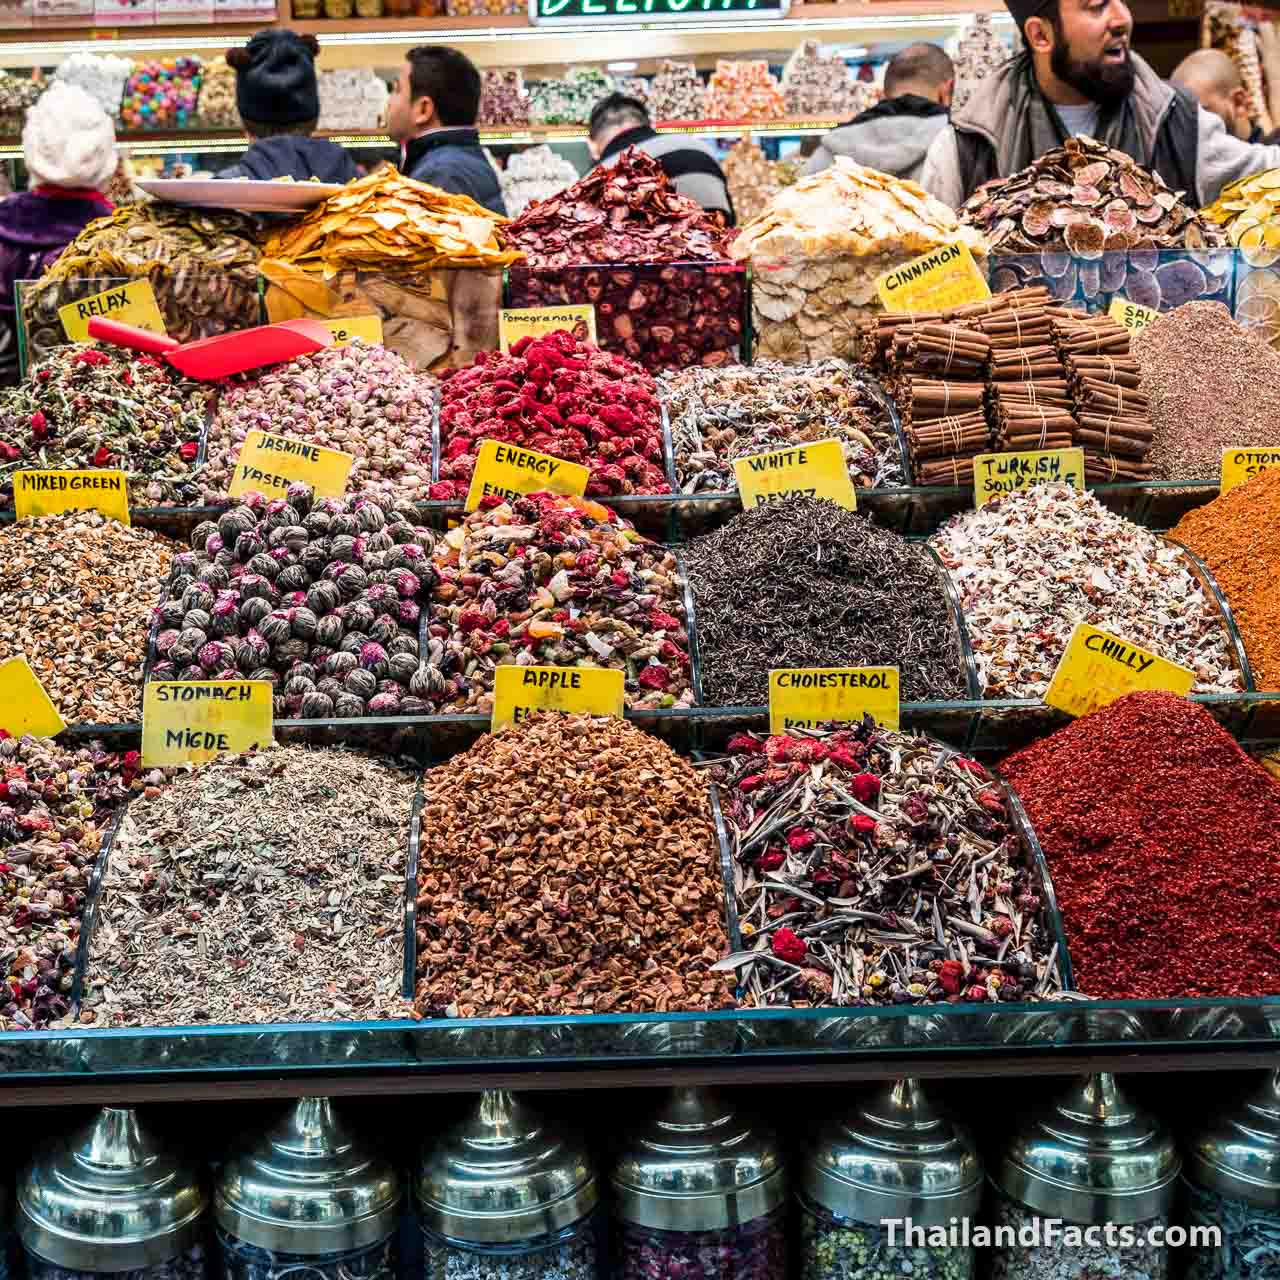 Grand-Bazaar-Istanbul-Shopping-food-spices-Turkish-delight-Turkey-2